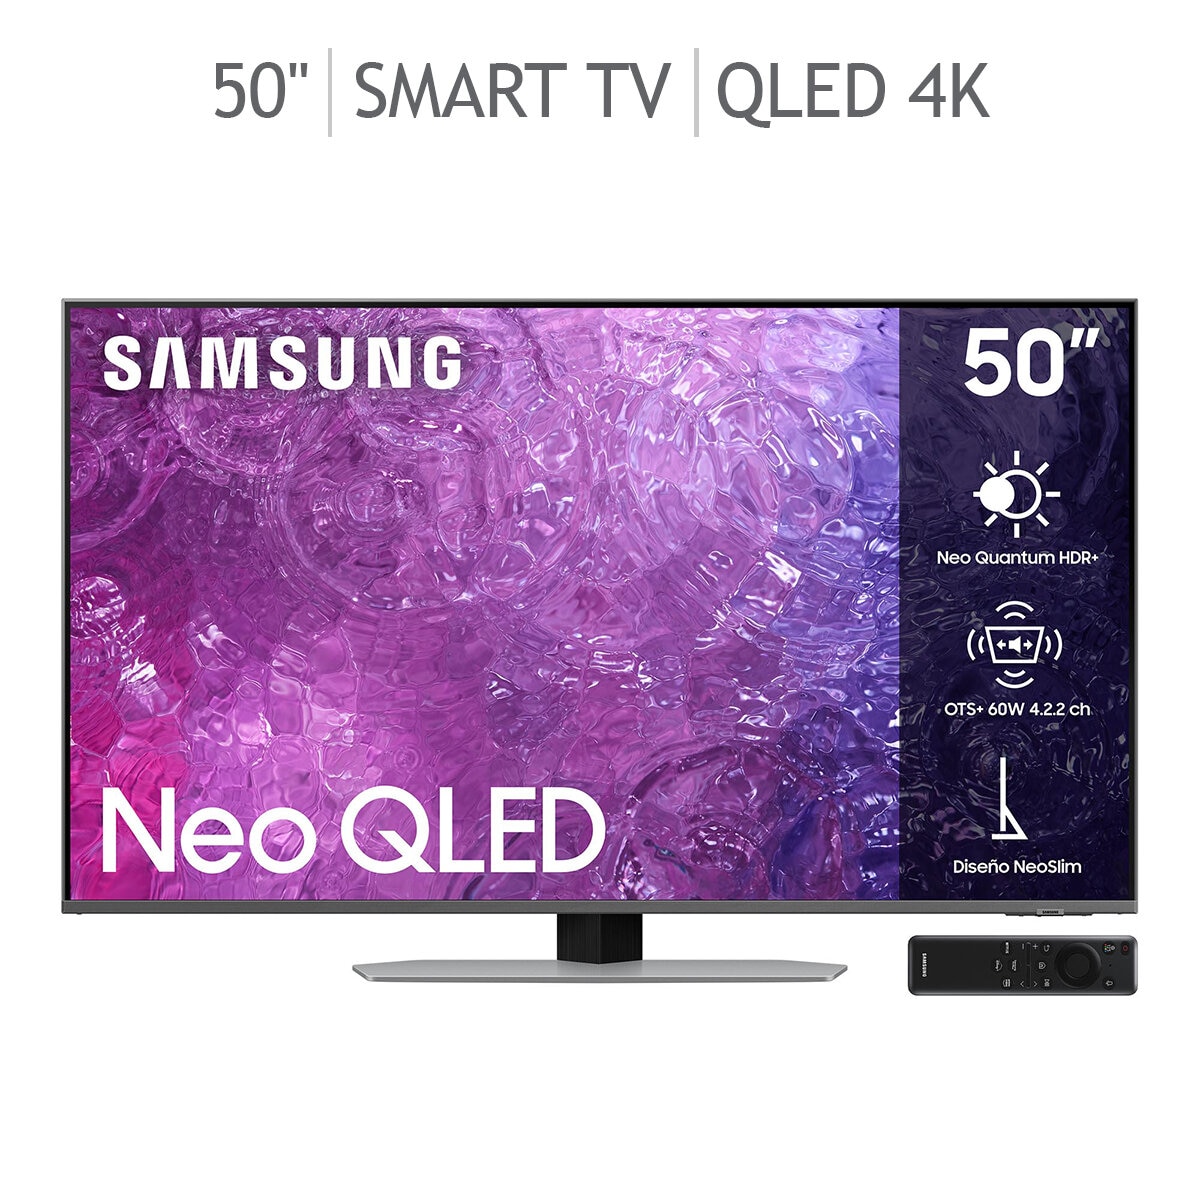 Pantalla Samsung 50 Pulgadas 4K Ultra HD Smart TV LED con